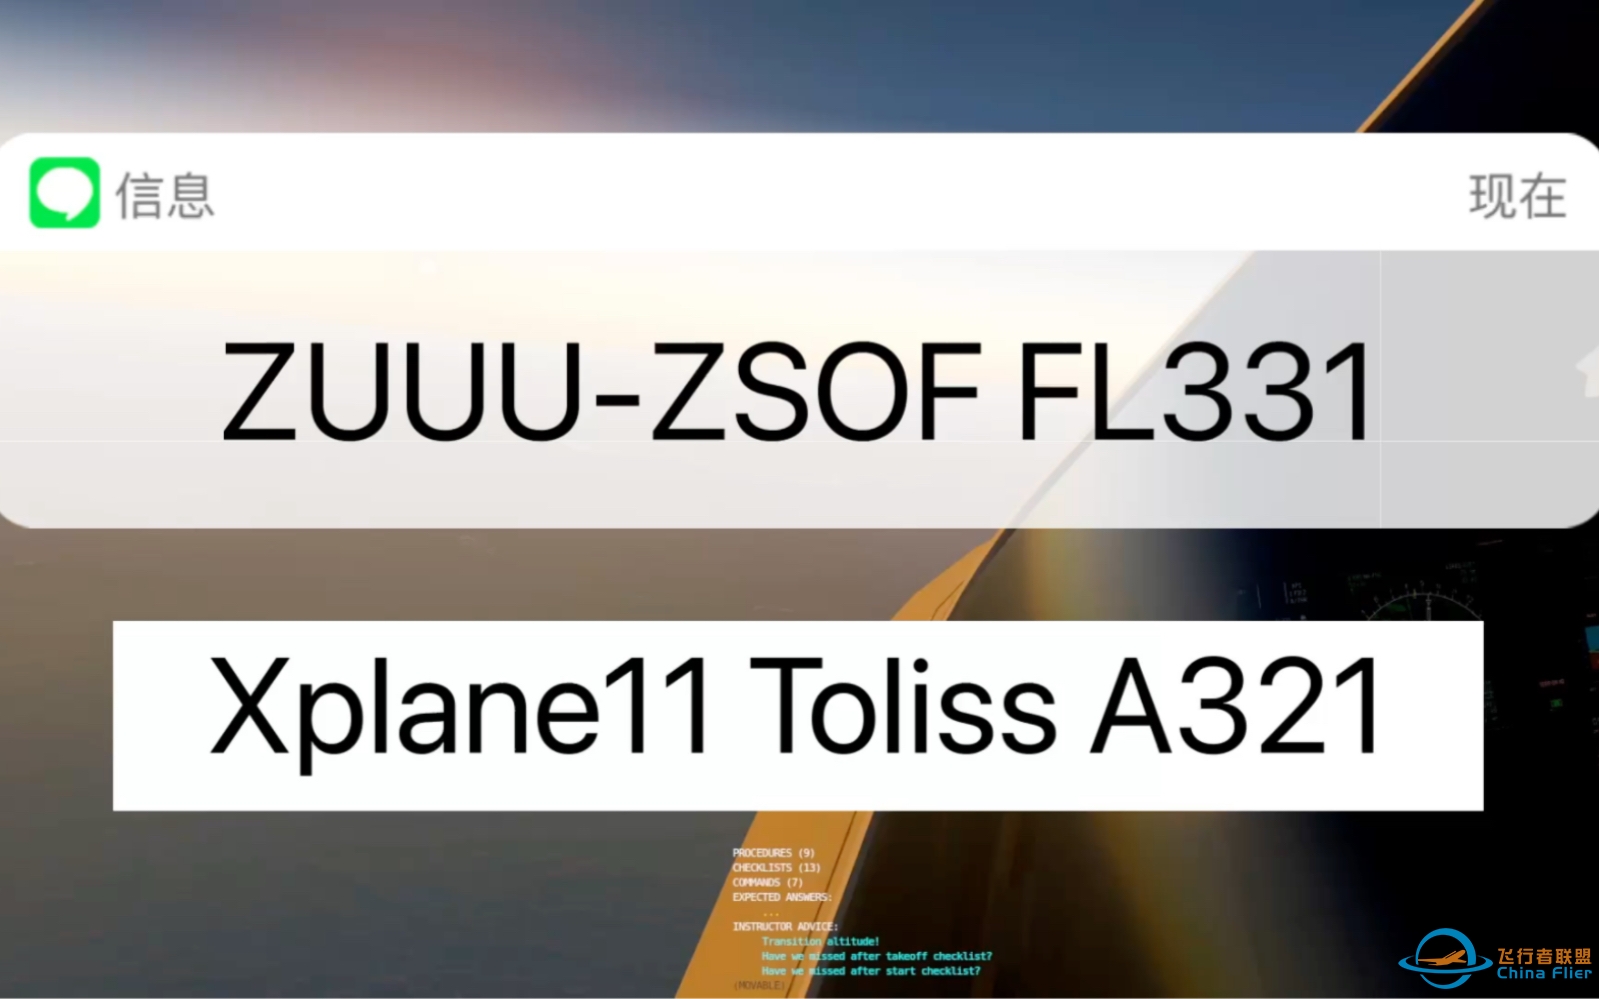 ZUUU-ZSOF XPLANE11 TOLISSA321巡航-6805 